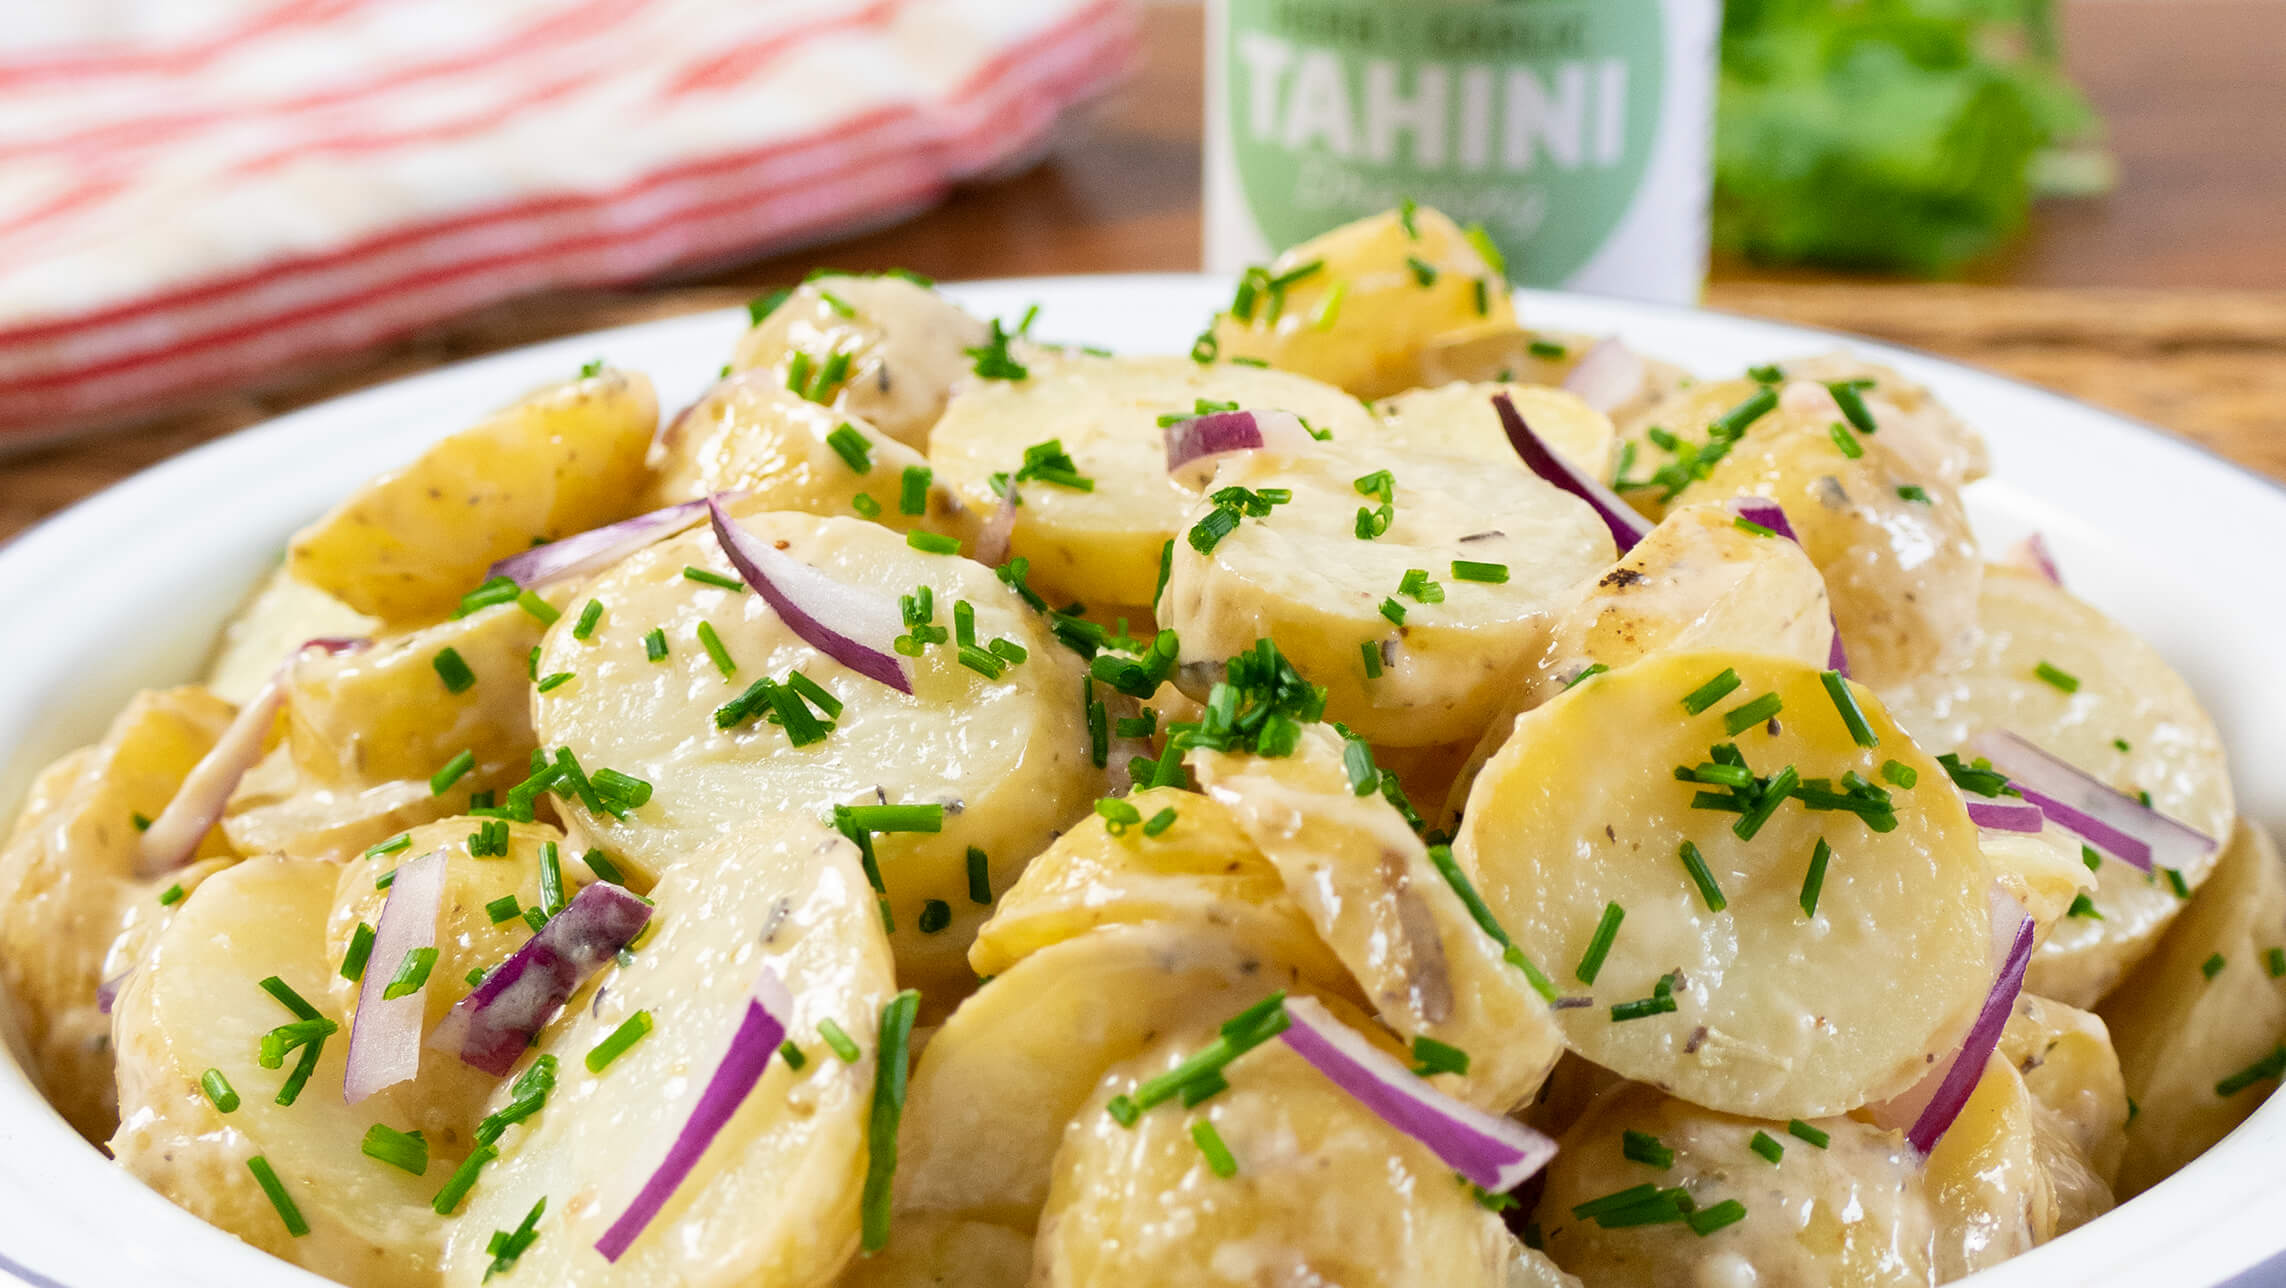 Nutritious vegan potato salad with our Garlic & Herb Dressing